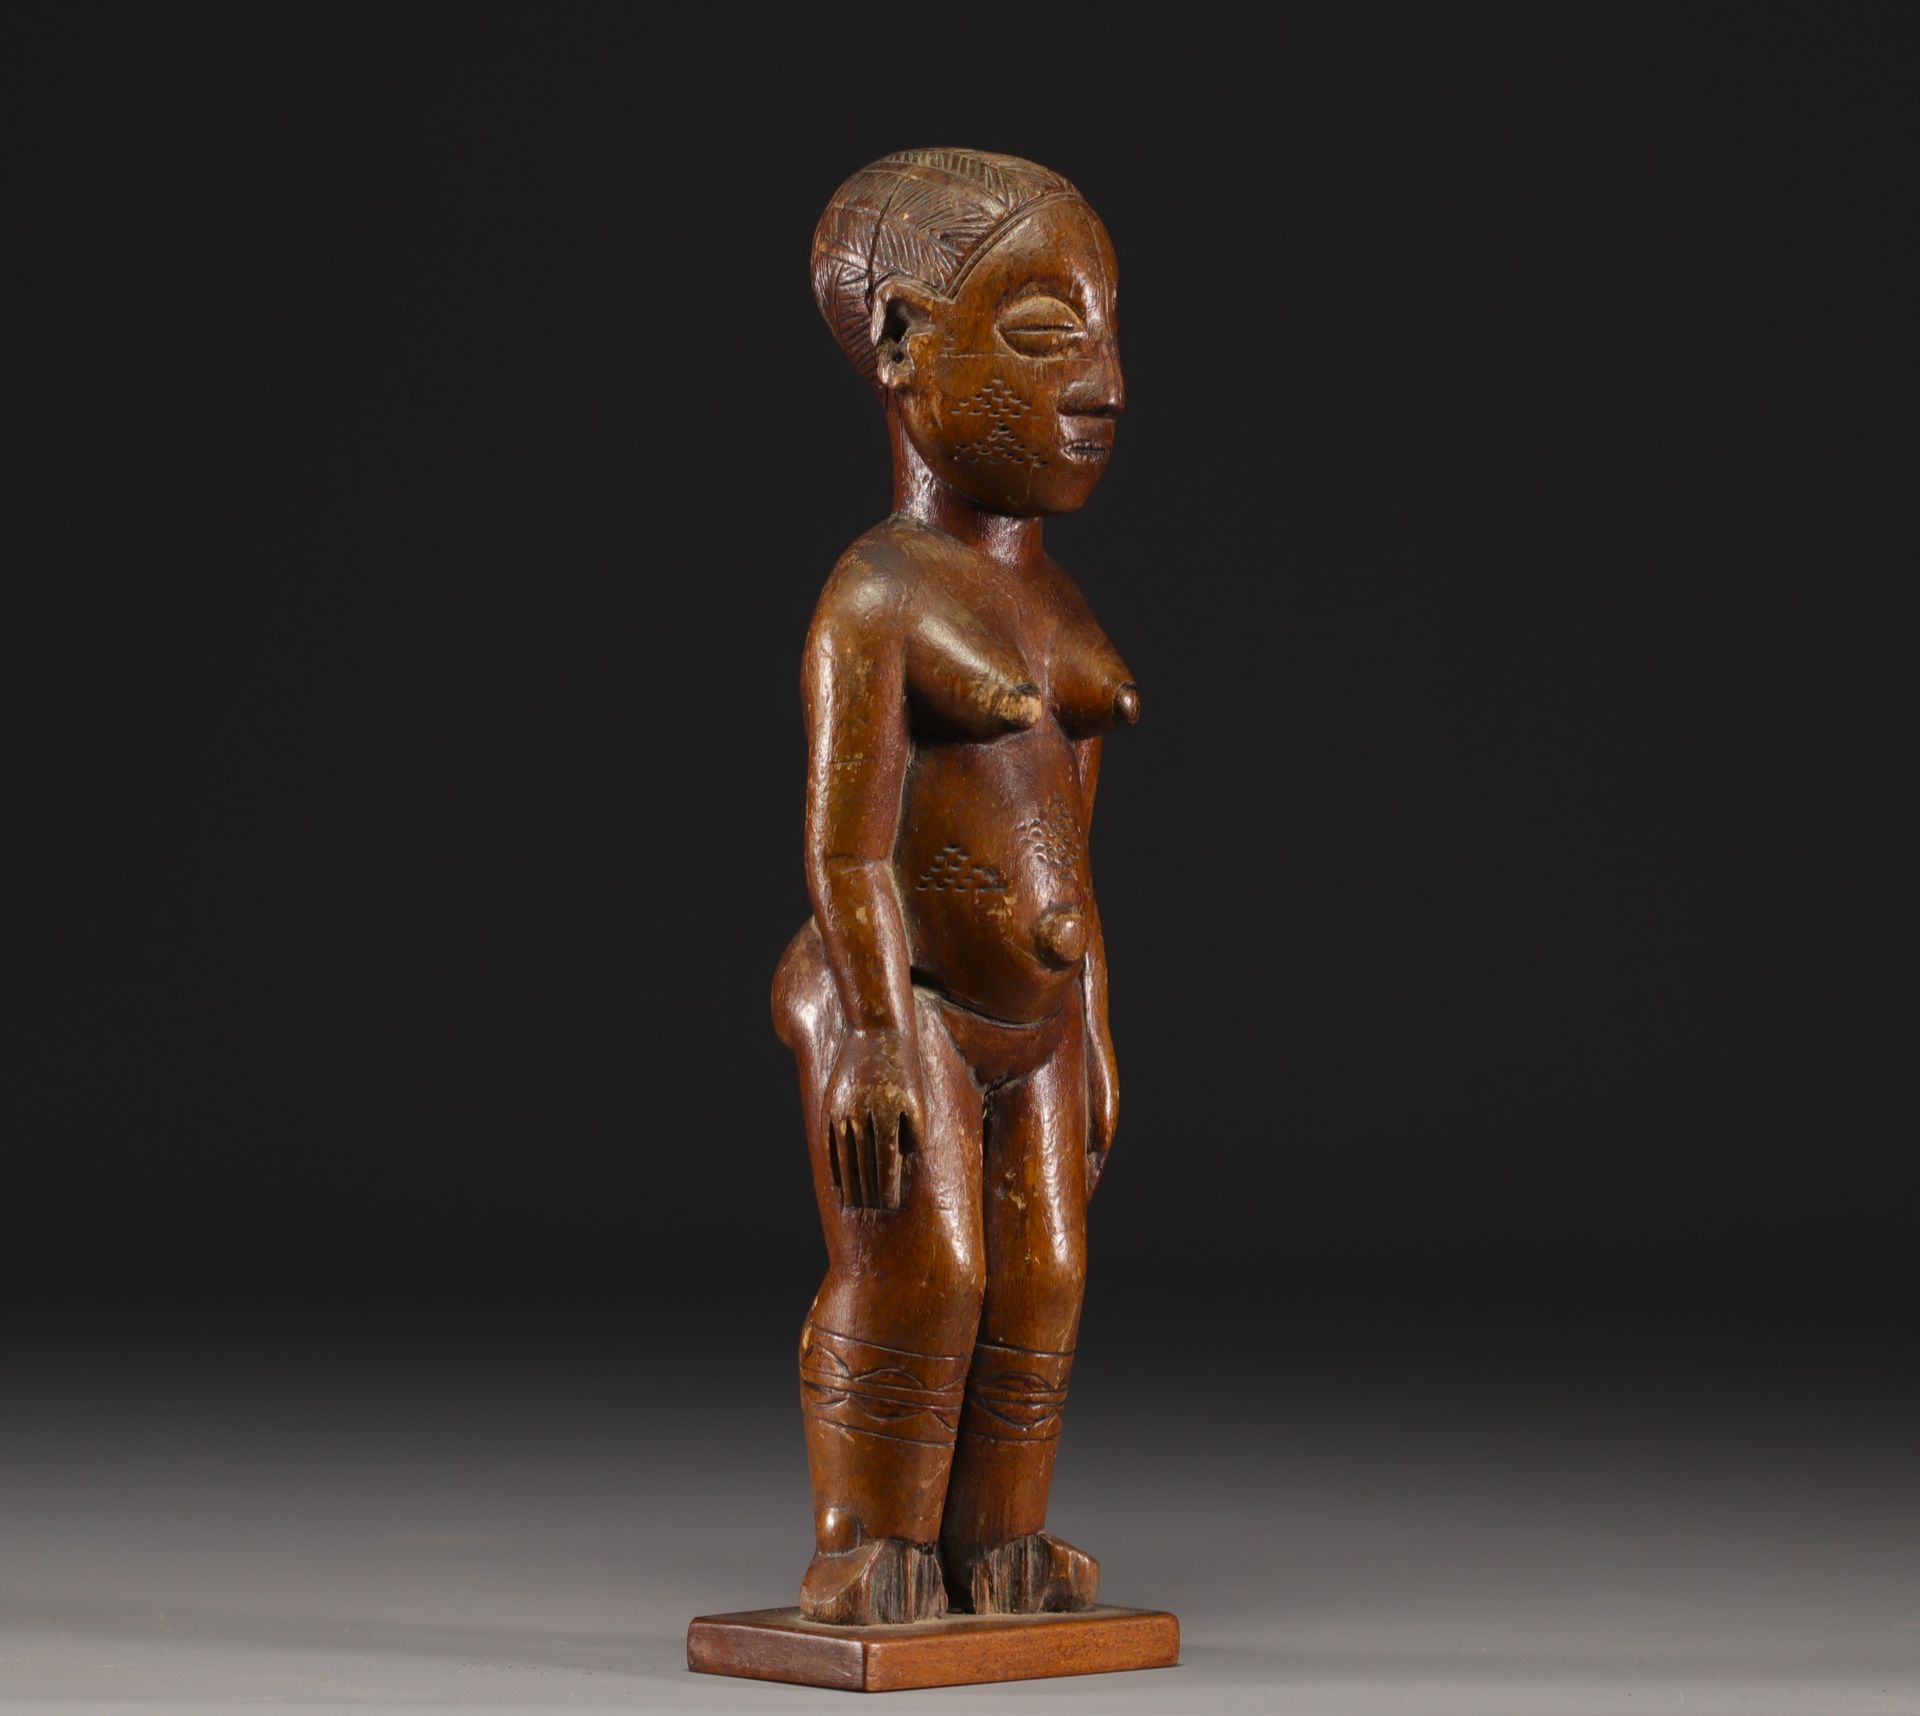 Null Antigua estatua de Mangbetu - Rep. Dem. Congo
Peso: 250 g
Entrega disponibl&hellip;